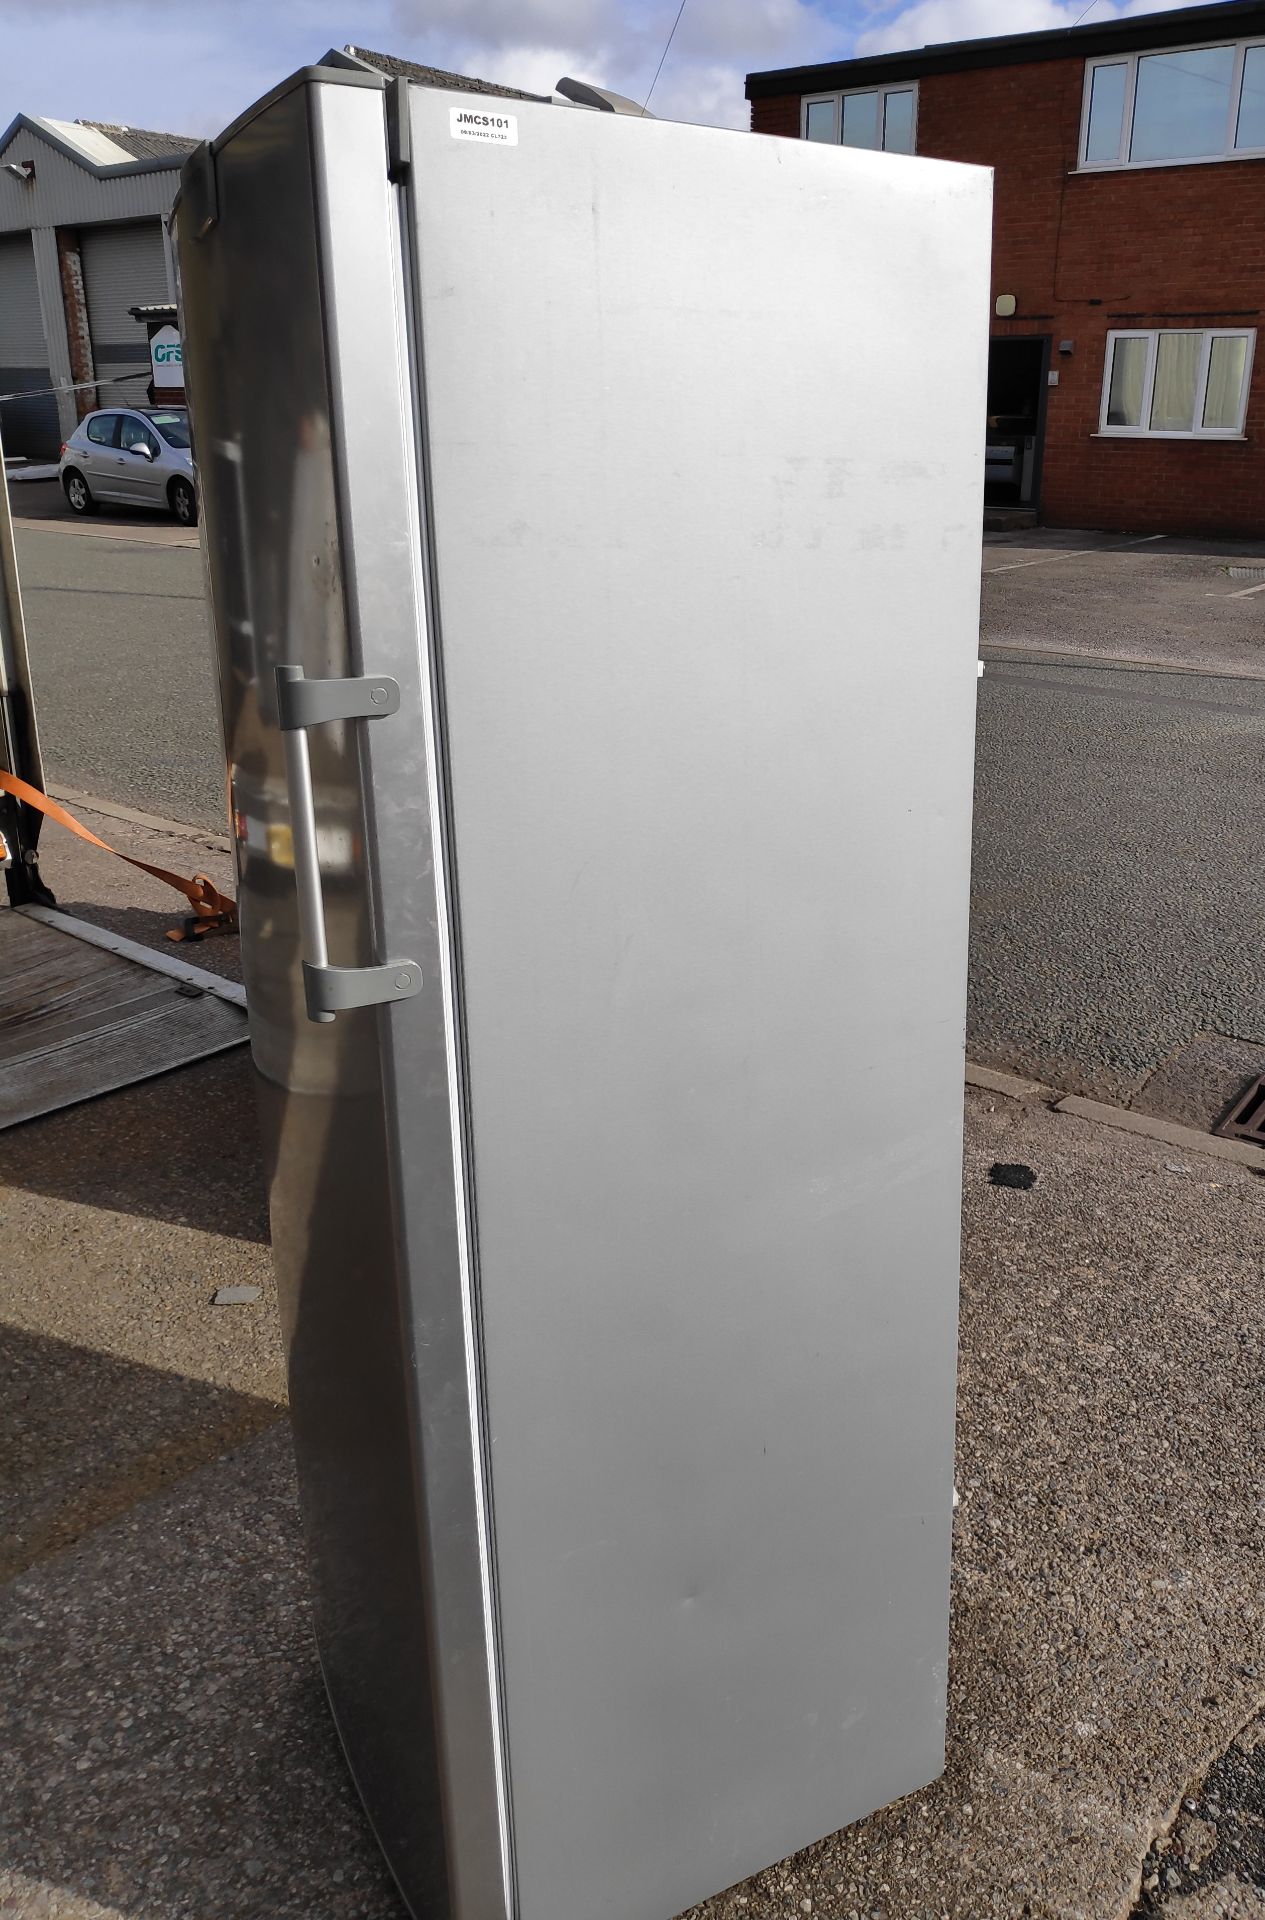 1 x Eurofred 340l Upright Refrigerator - Model MC350A+S - JMCS101 - CL723 - Location: Altrincham - Image 9 of 11